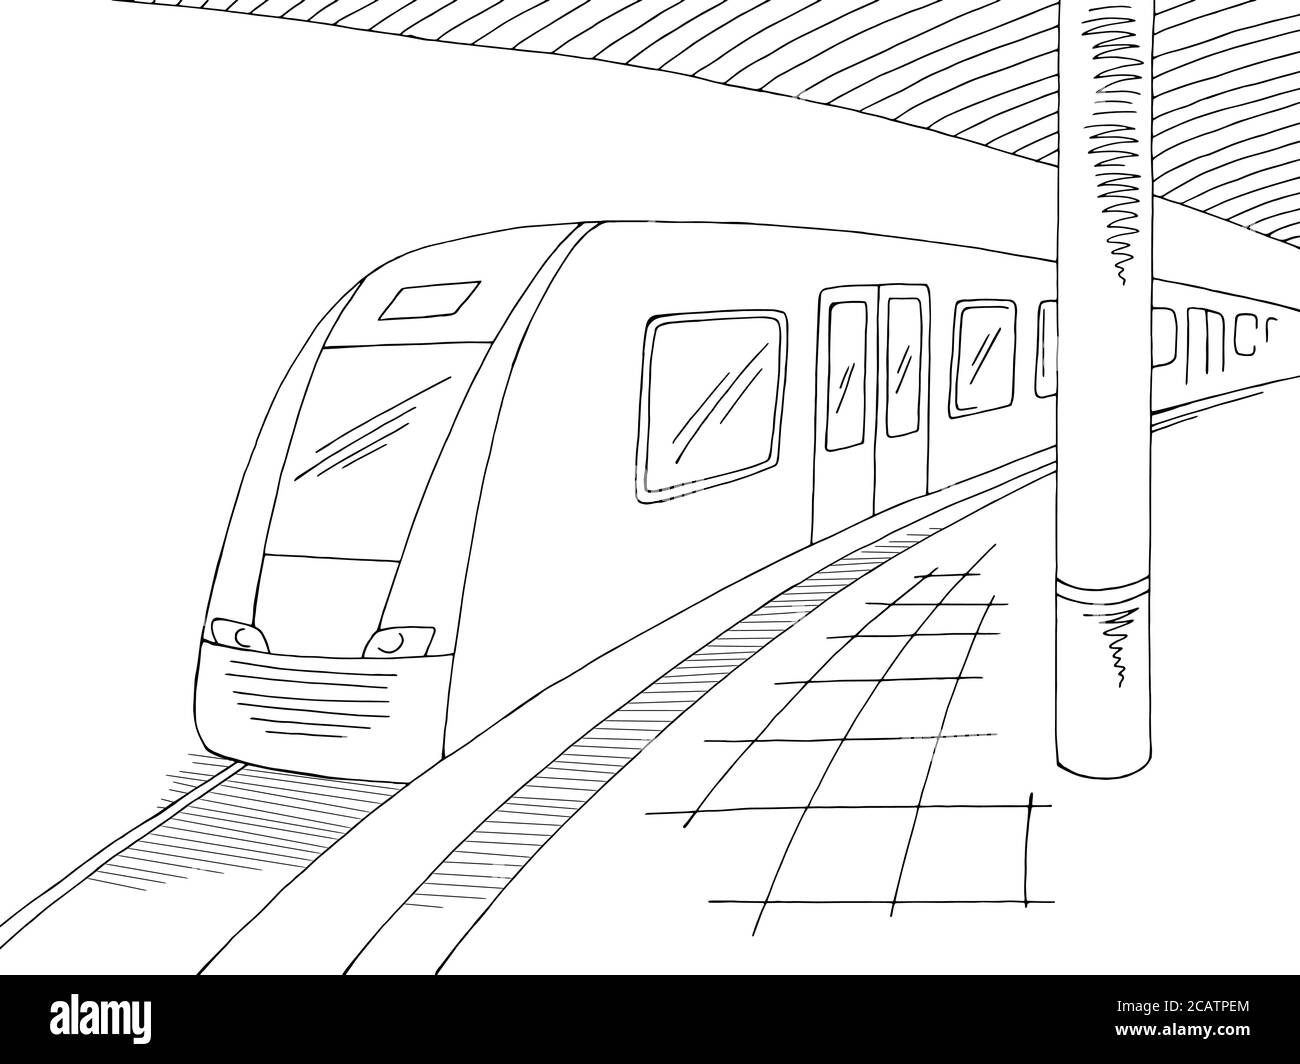 Bahnhof Bahnsteig Zug Grafik schwarz weiß Skizze Illustration Vektor Stock Vektor